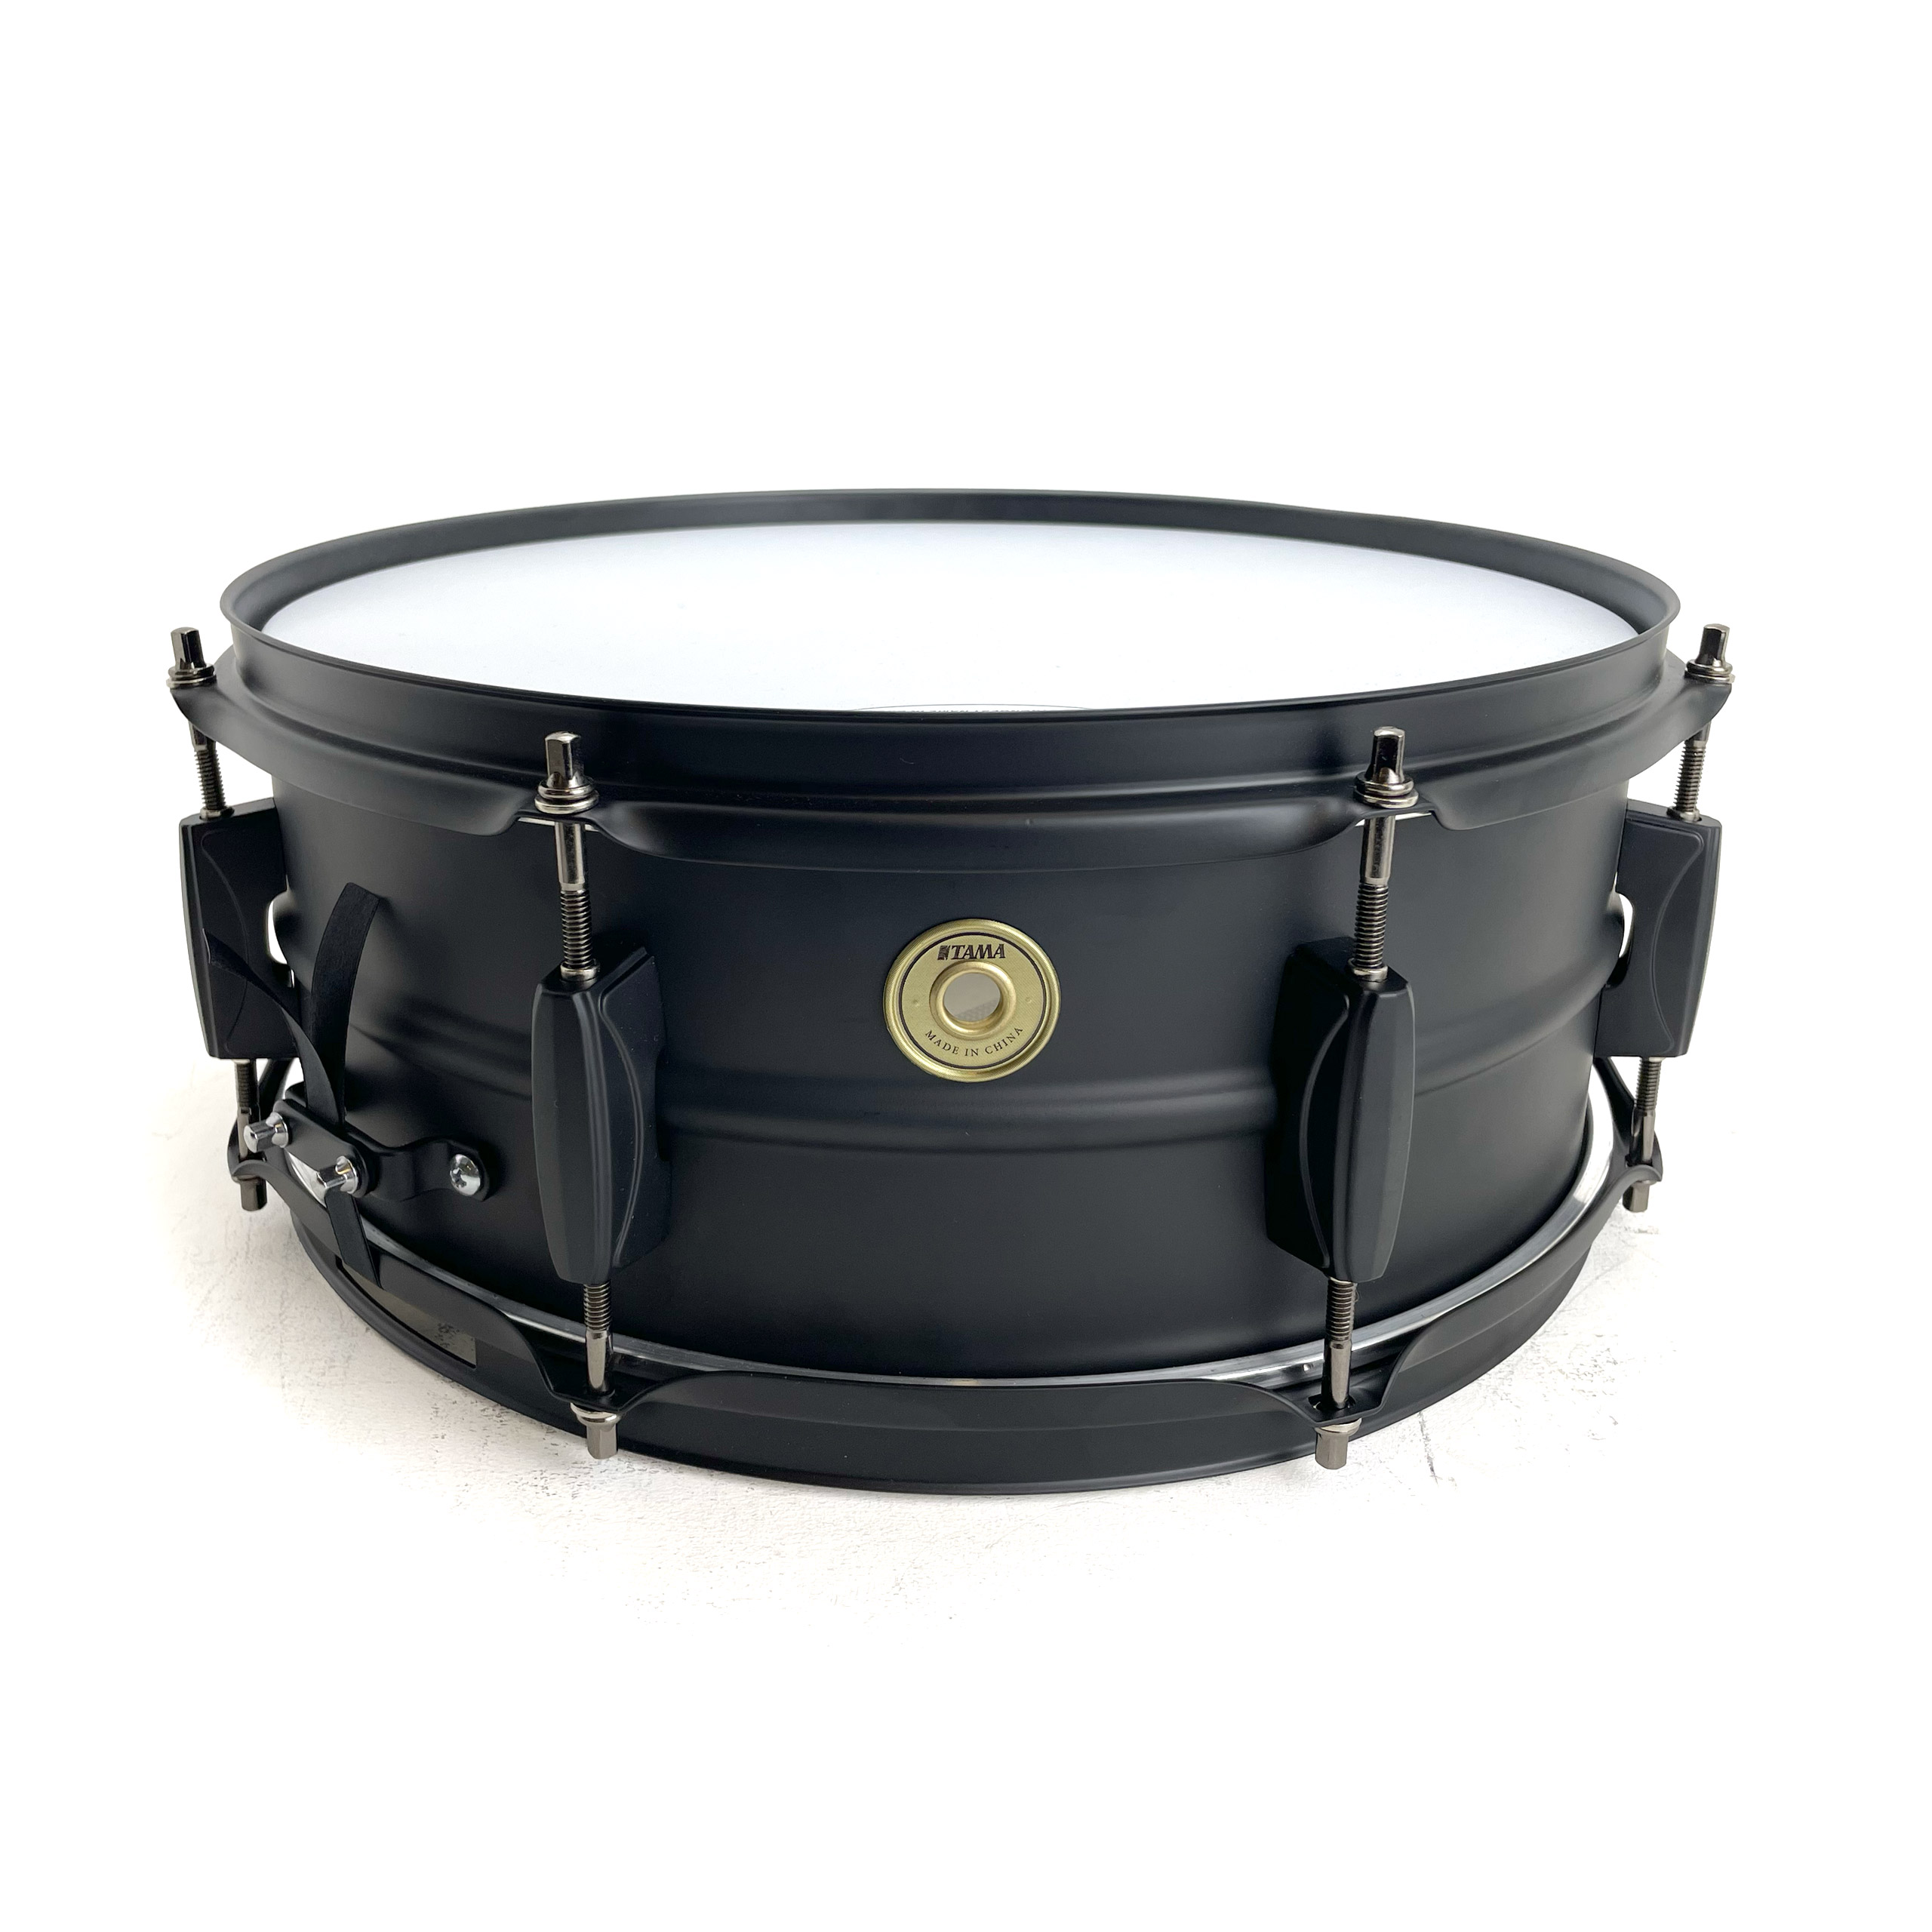 Tama Metalworks 14 x 5.5 Inch Black on Black Steel Snare Drum (NEW)